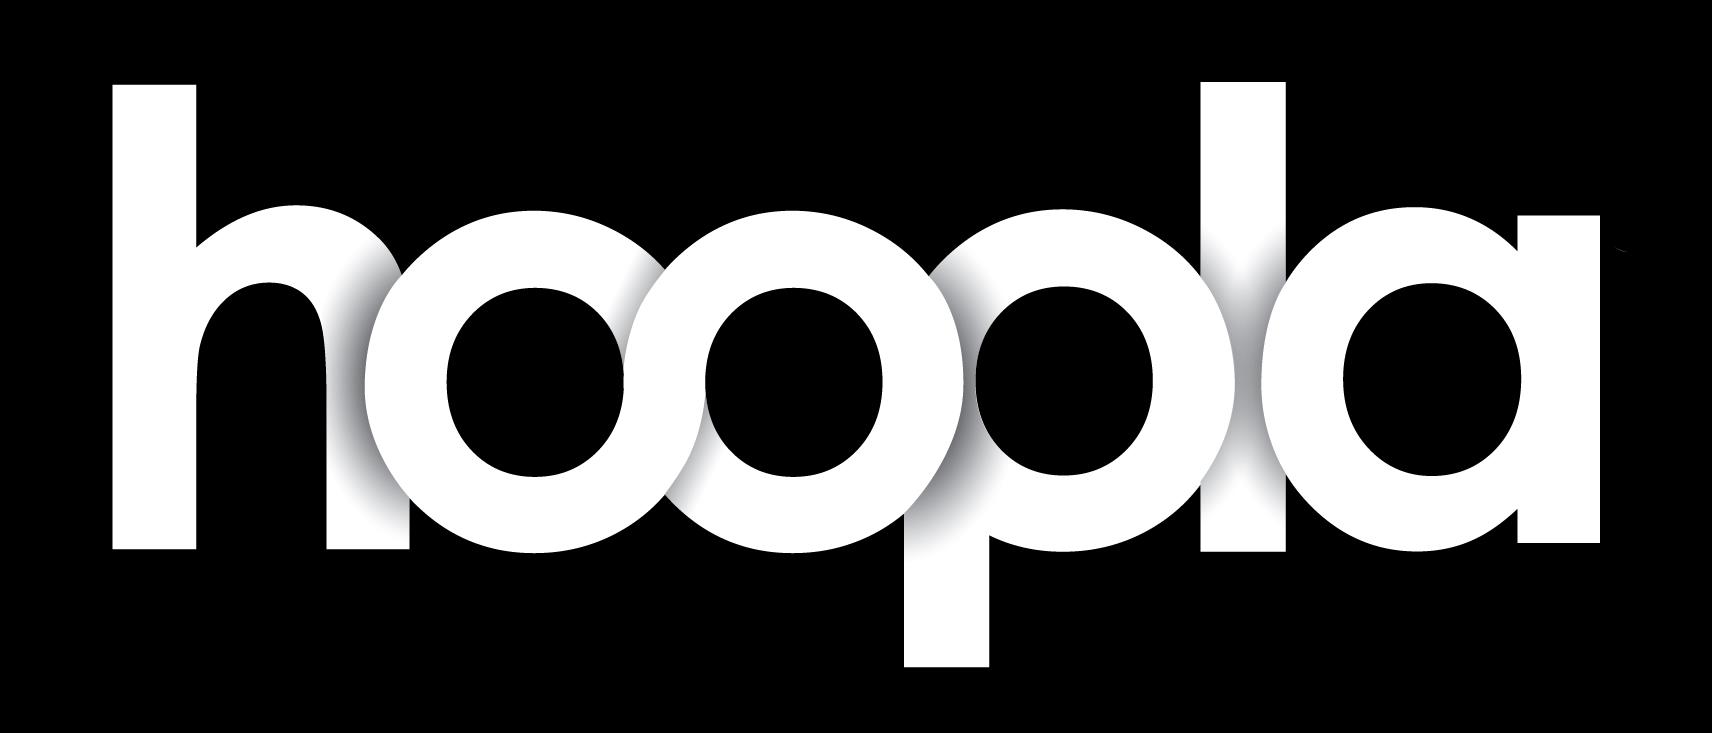 Hoopla ebook platform